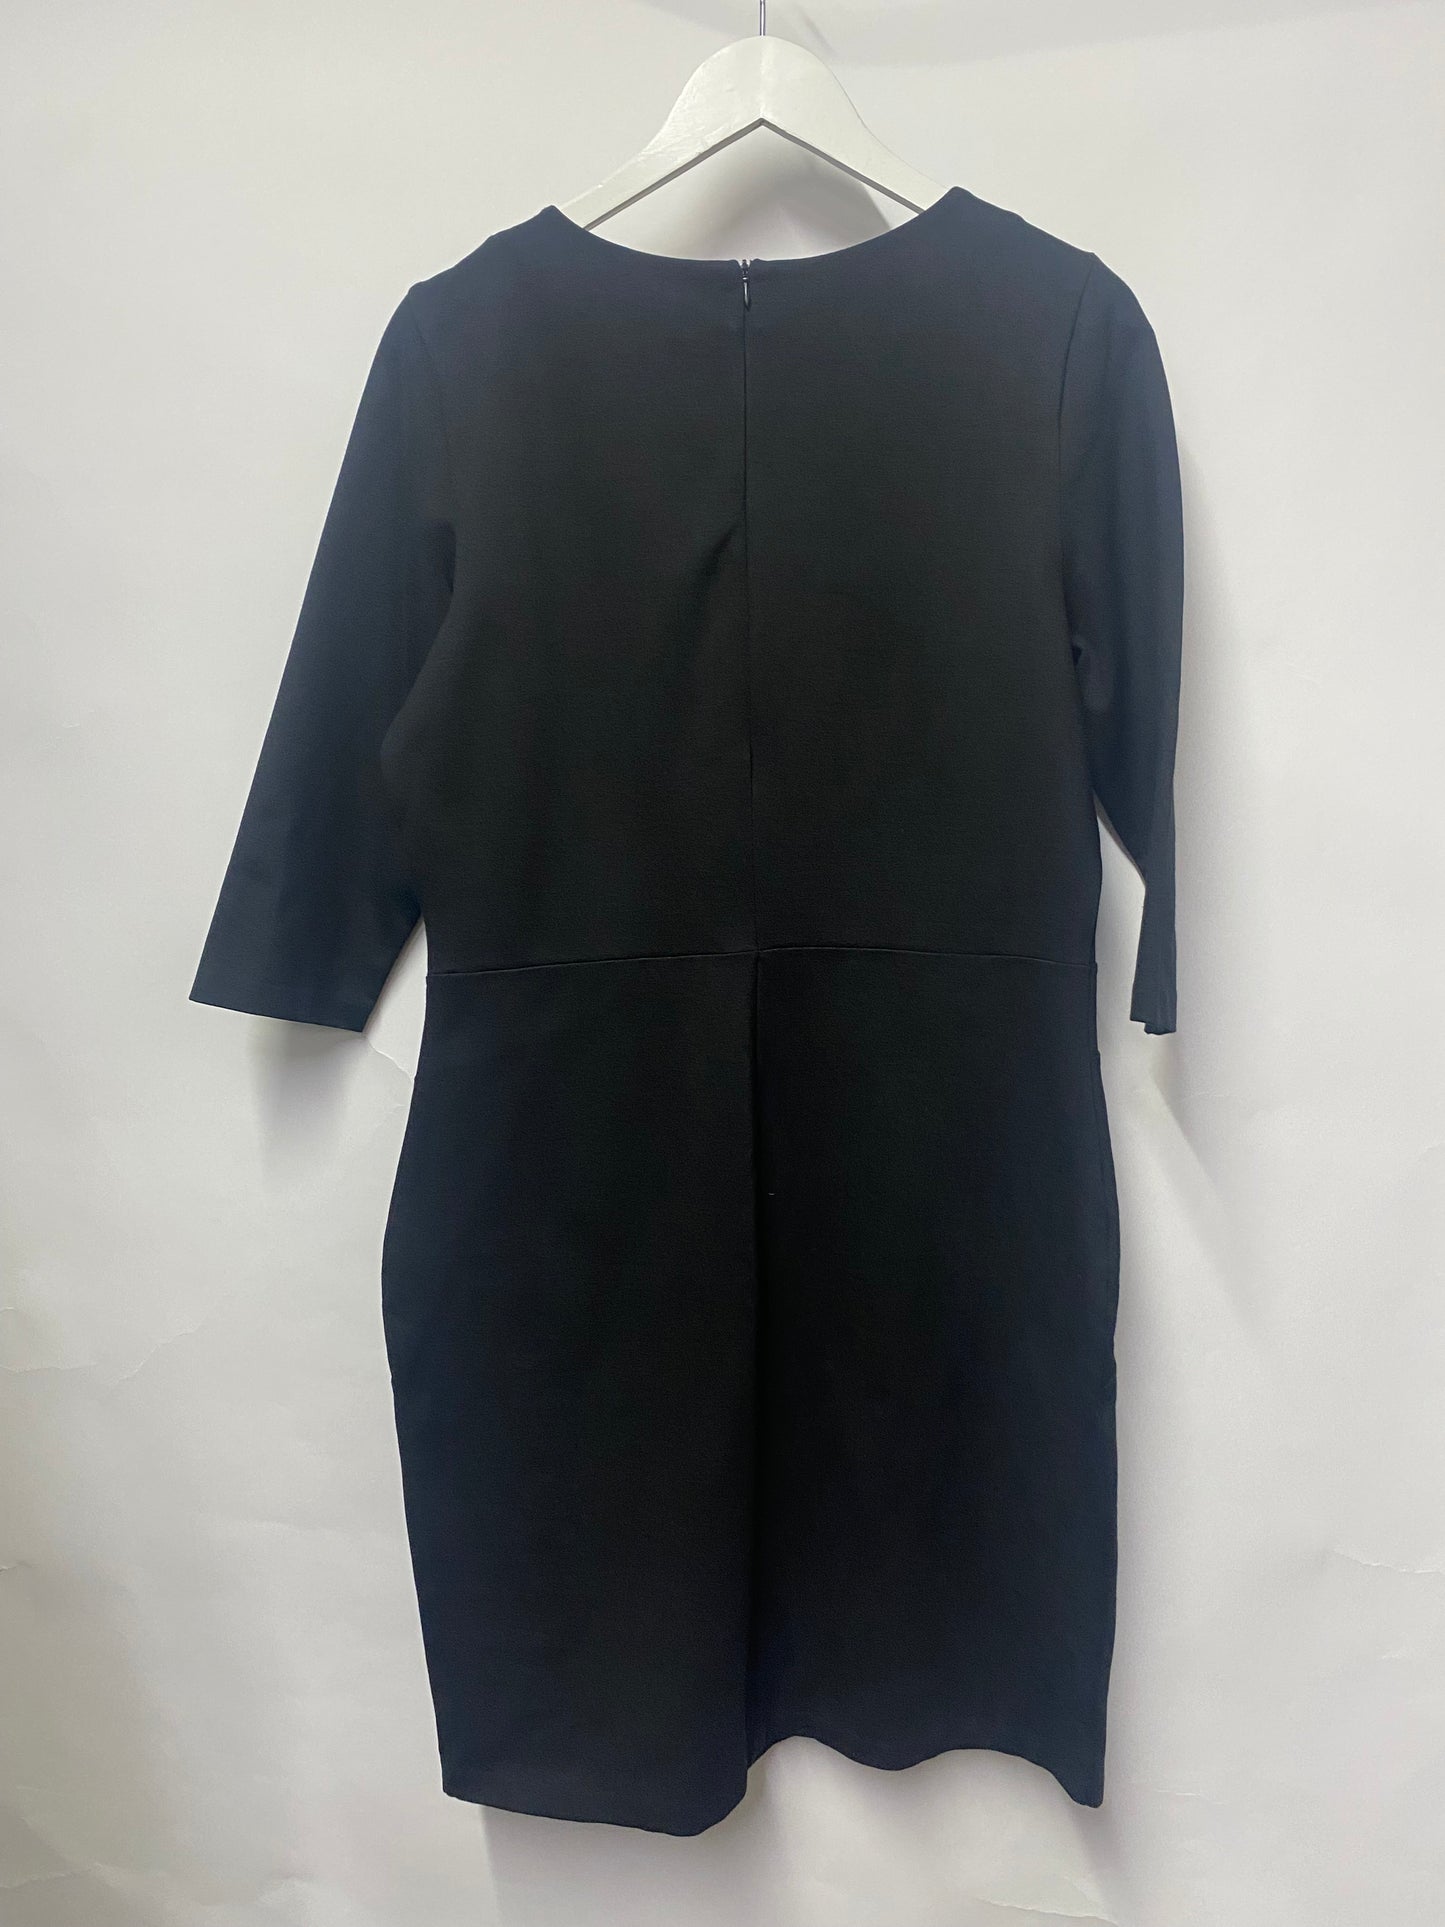 Hugo Boss Black Simple Sheath Mid Length Work Dress XL